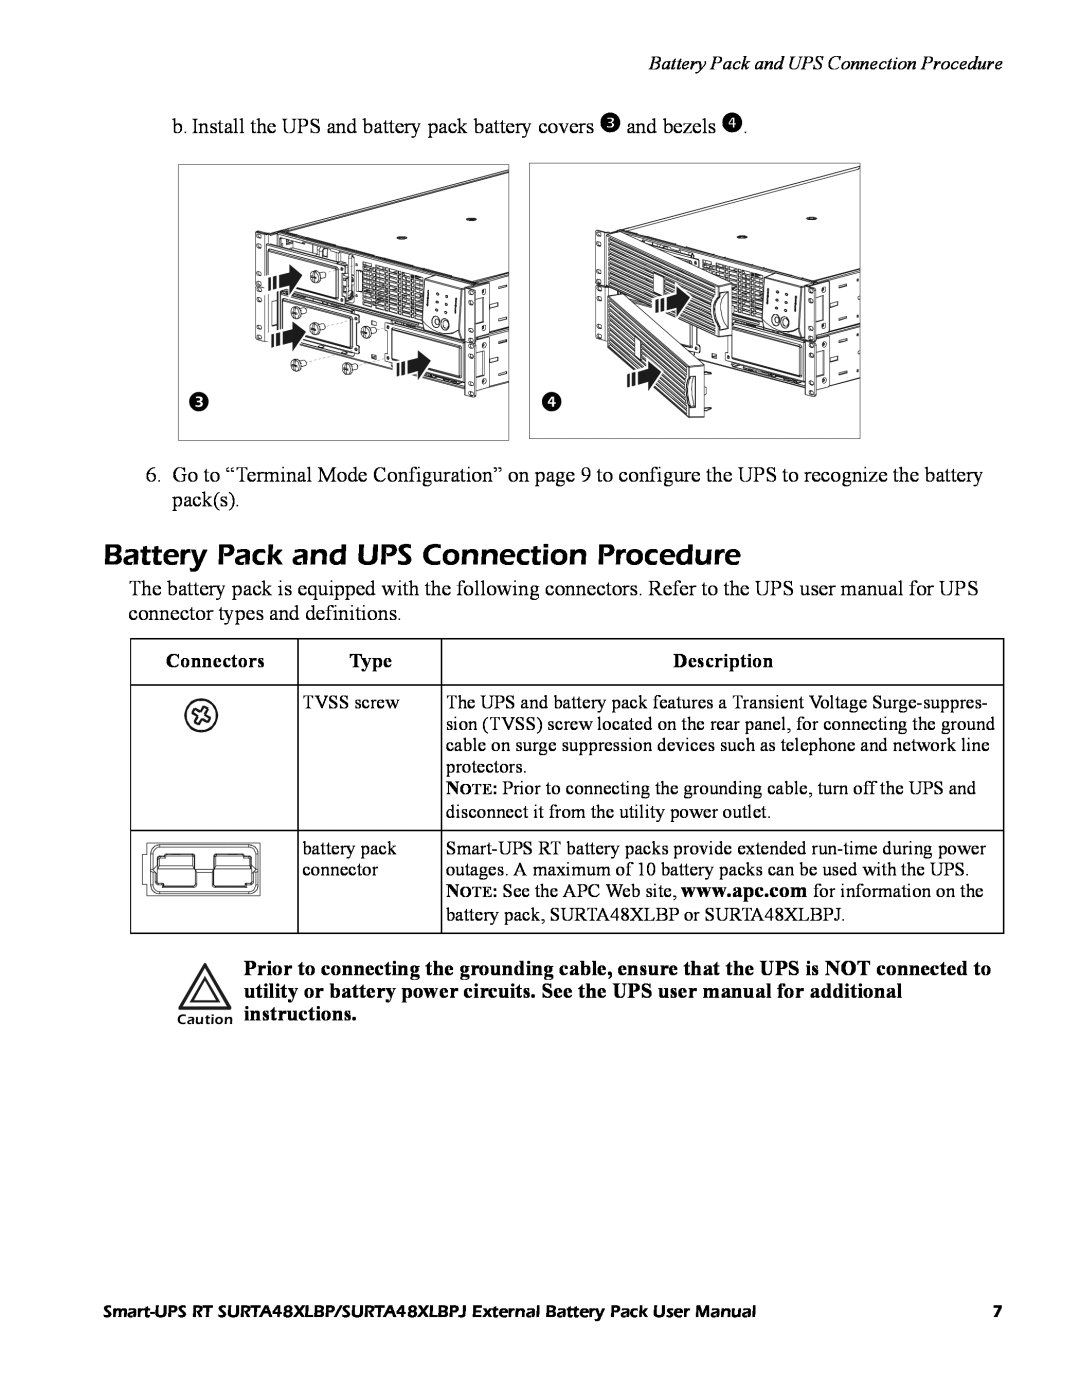 APC URTA48XLBPJ user manual Battery Pack and UPS Connection Procedure, Connectors, Type, Description, Caution instructions 